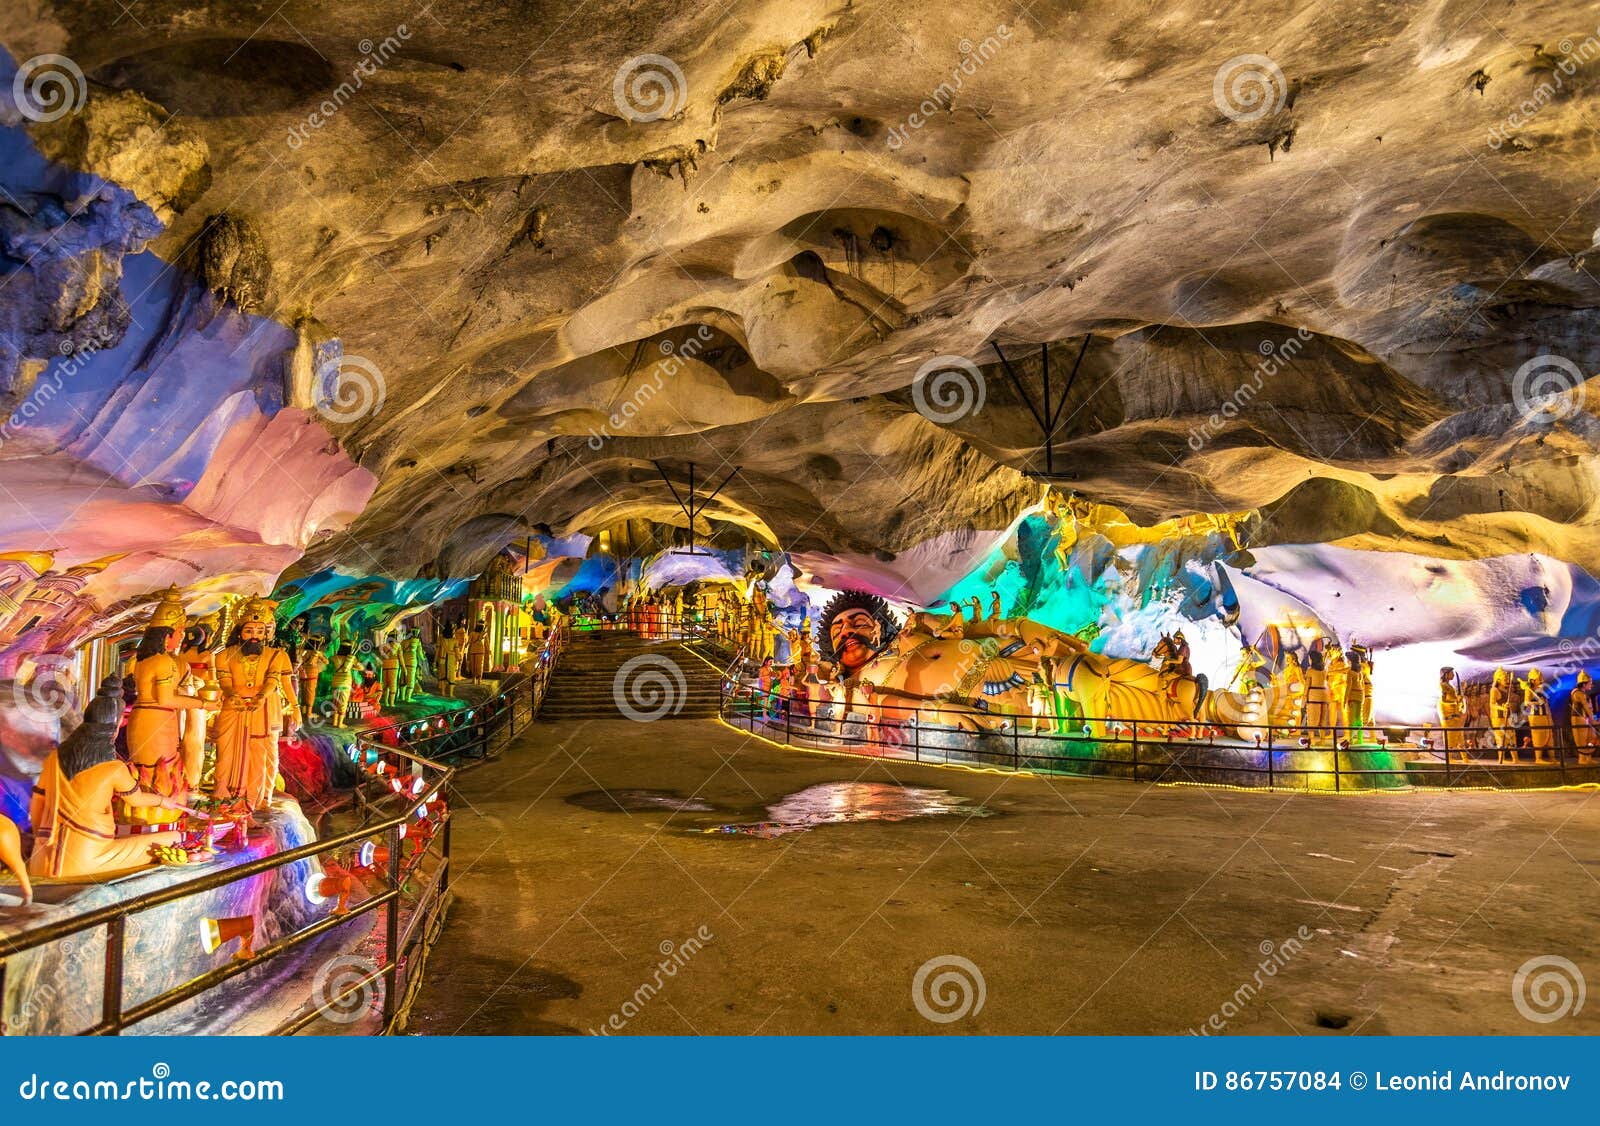 interior of the ramayana cave at batu caves complex, kuala lumpur, malaysia